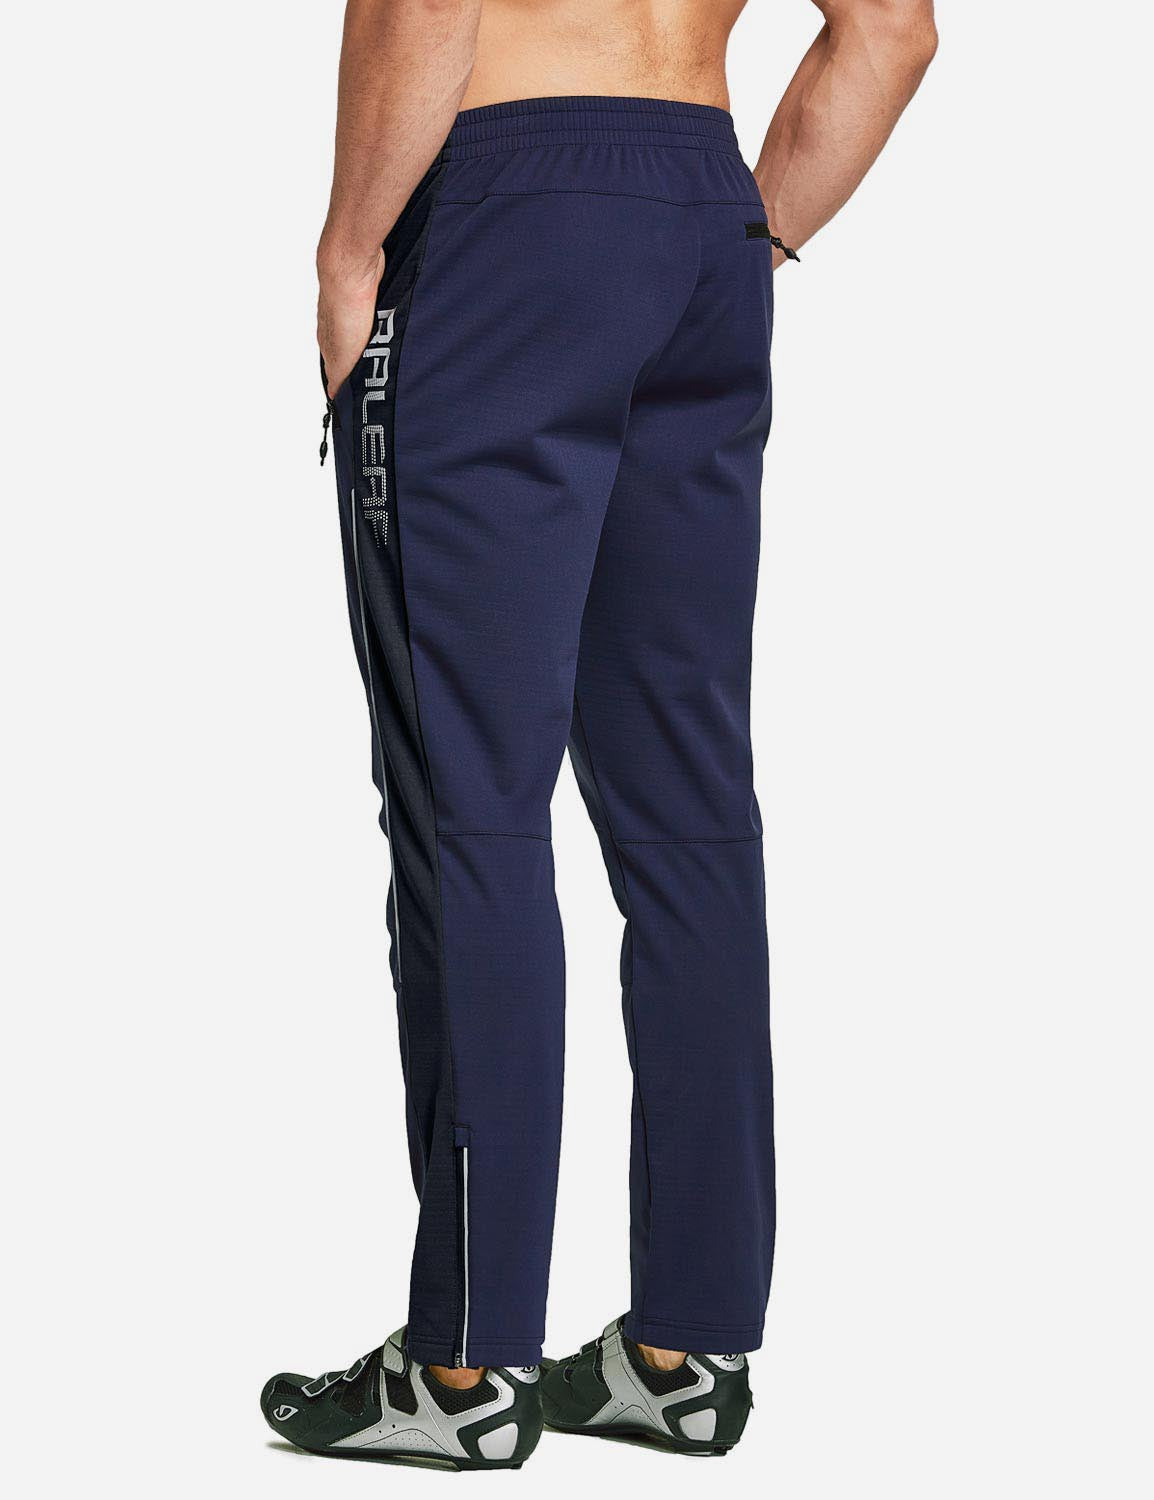 Baleaf Men's Thermal Fleece-Lined Windproof Pocketed Sweat Pants aai076 Navy Blue/Black Back